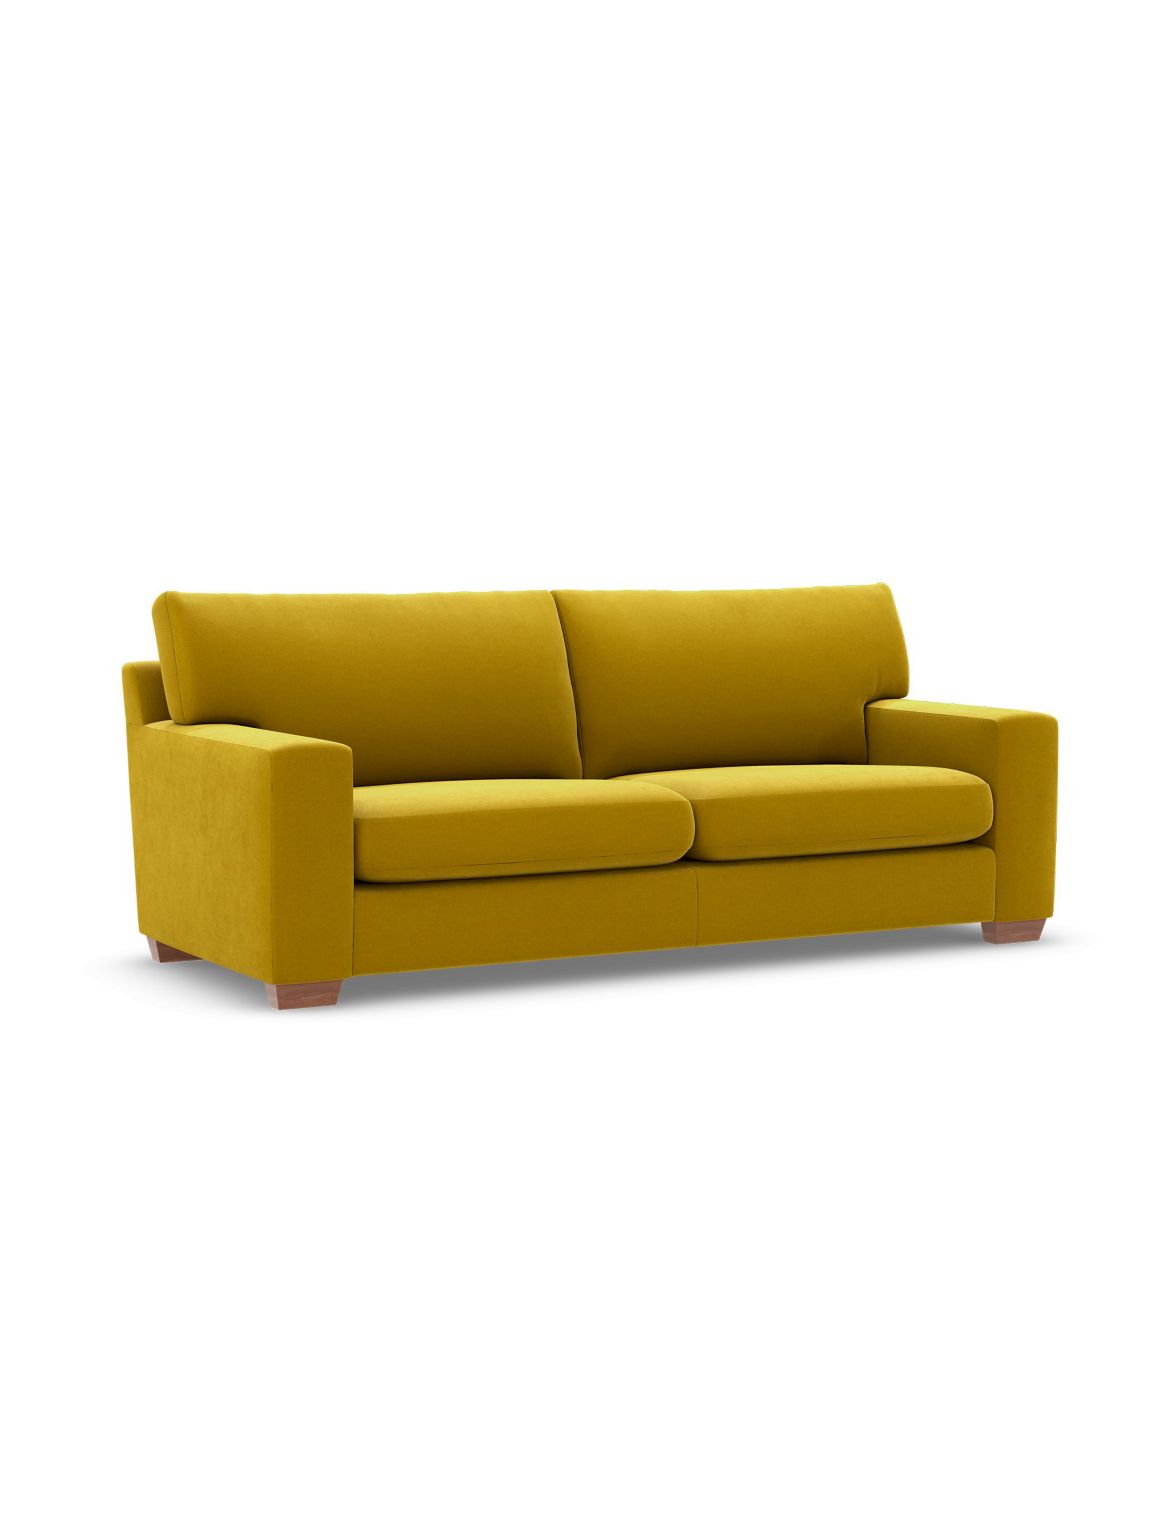 Alfie Large Sofa yellow